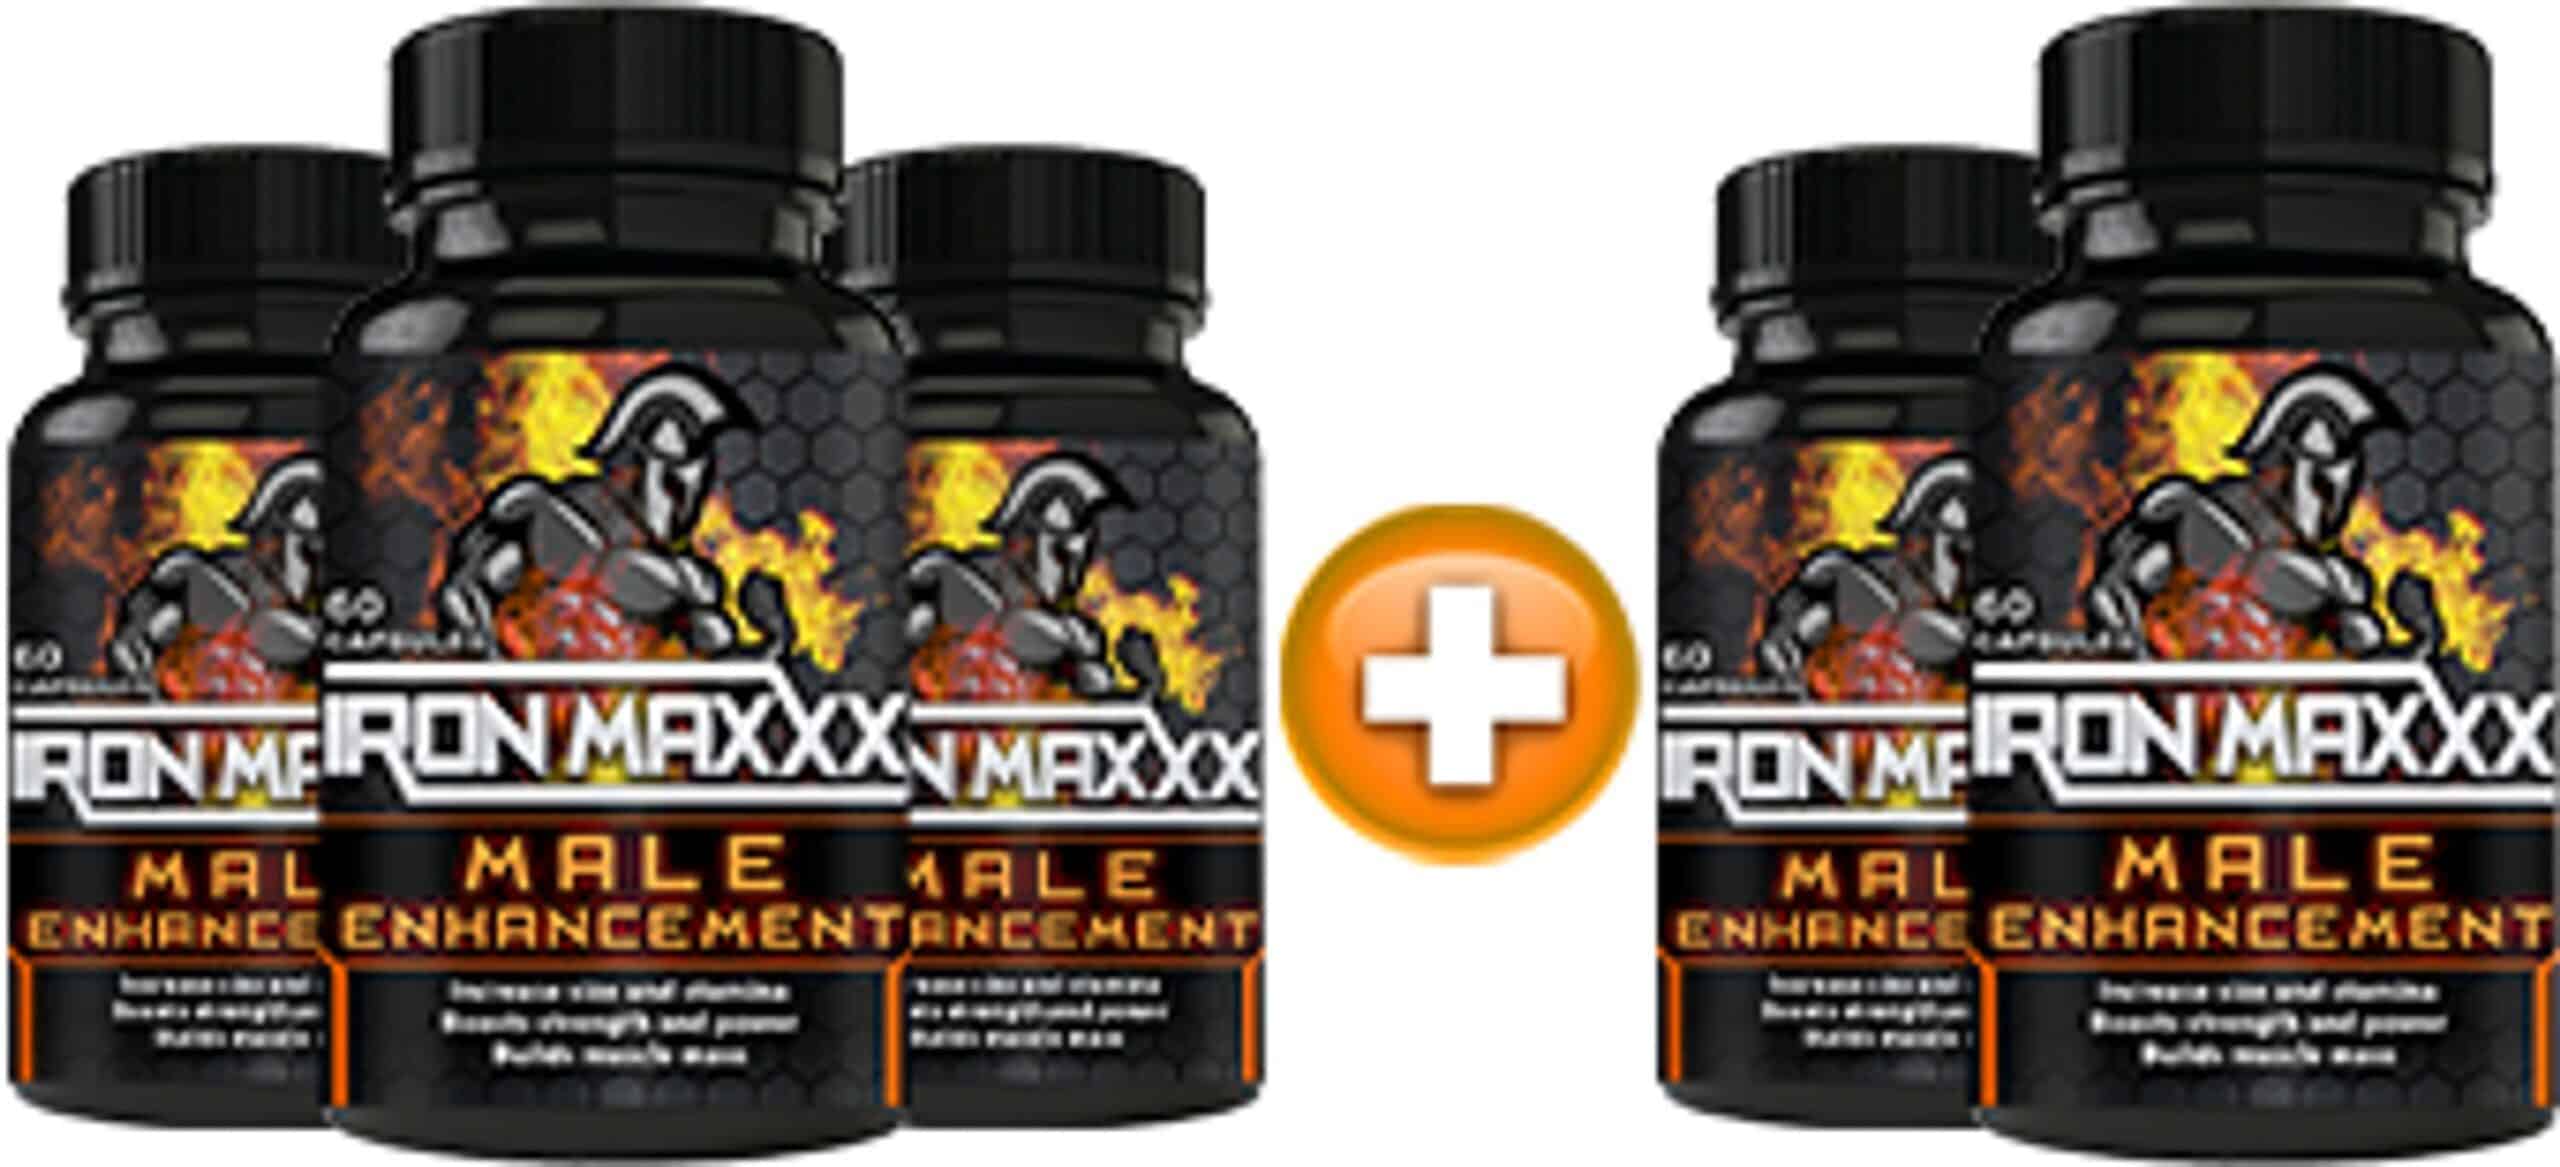 Iron Maxxx Male Enhancement 